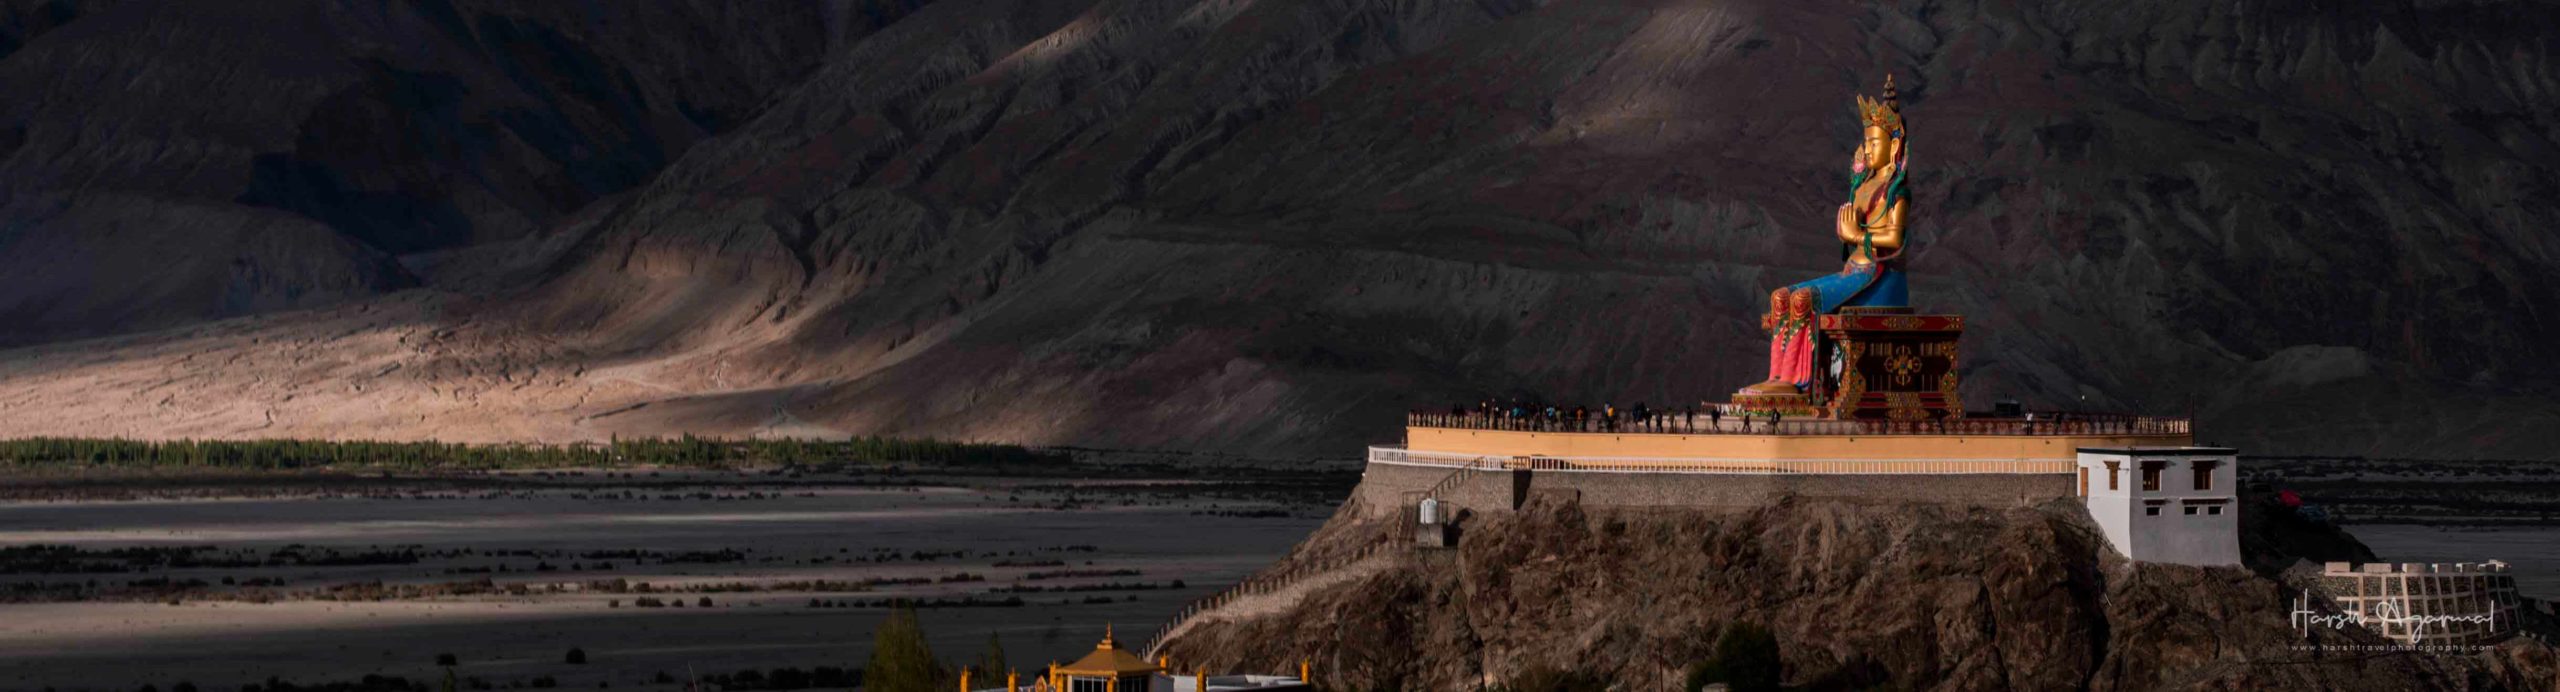 Ladakh photo tour | ladakh photography tour | ladakh tour India | Leh and ladakh photo tour